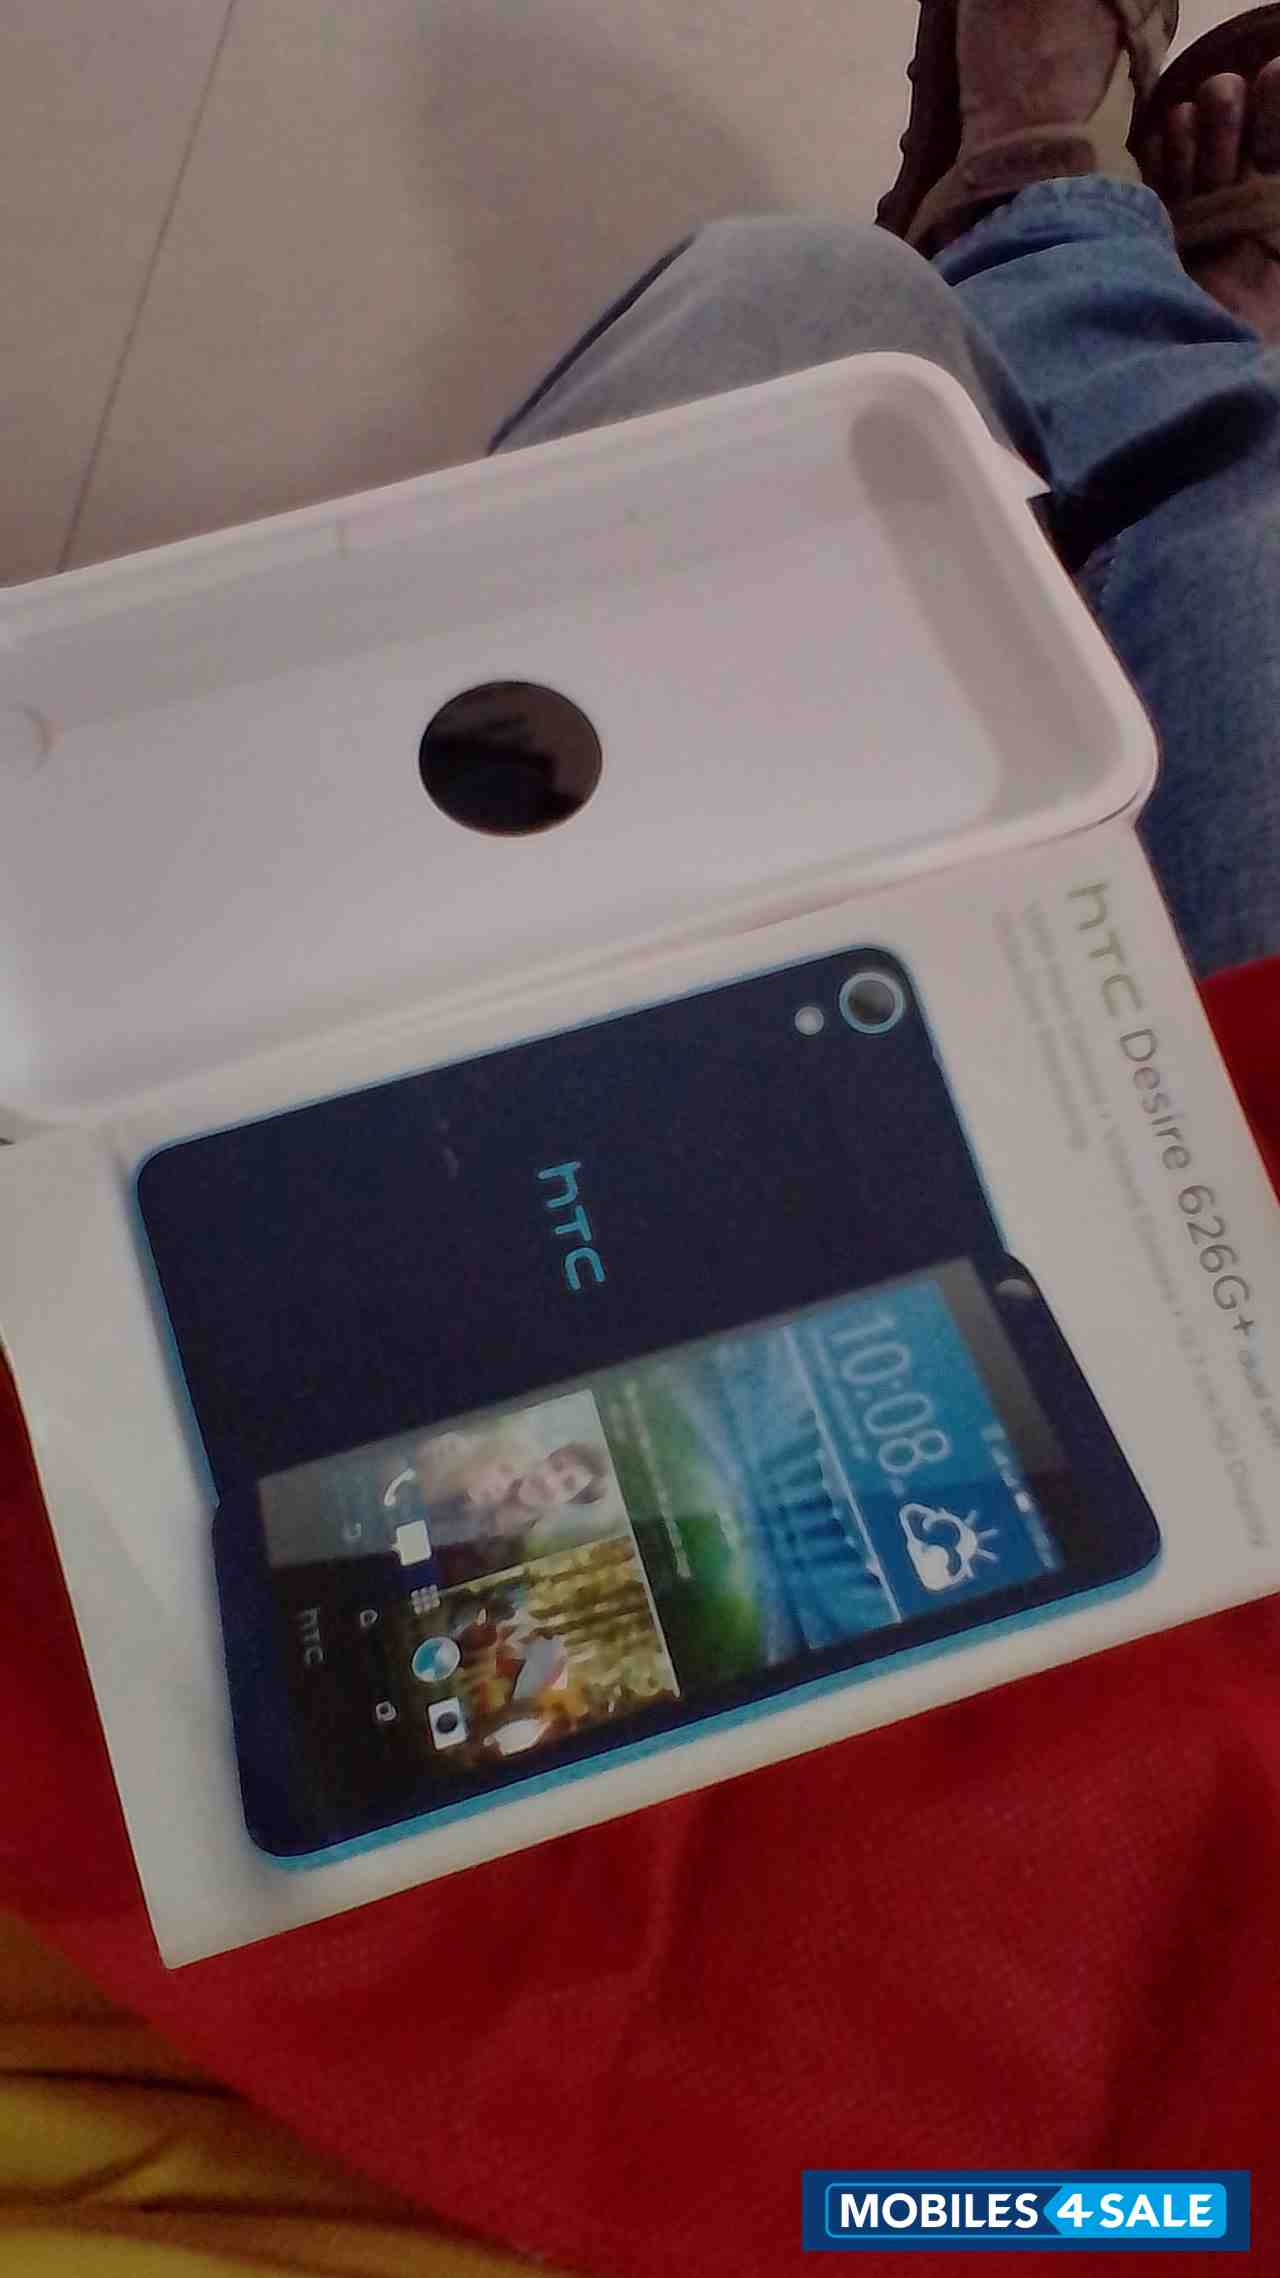 Blue HTC Desire 626G Plus Dual SIM